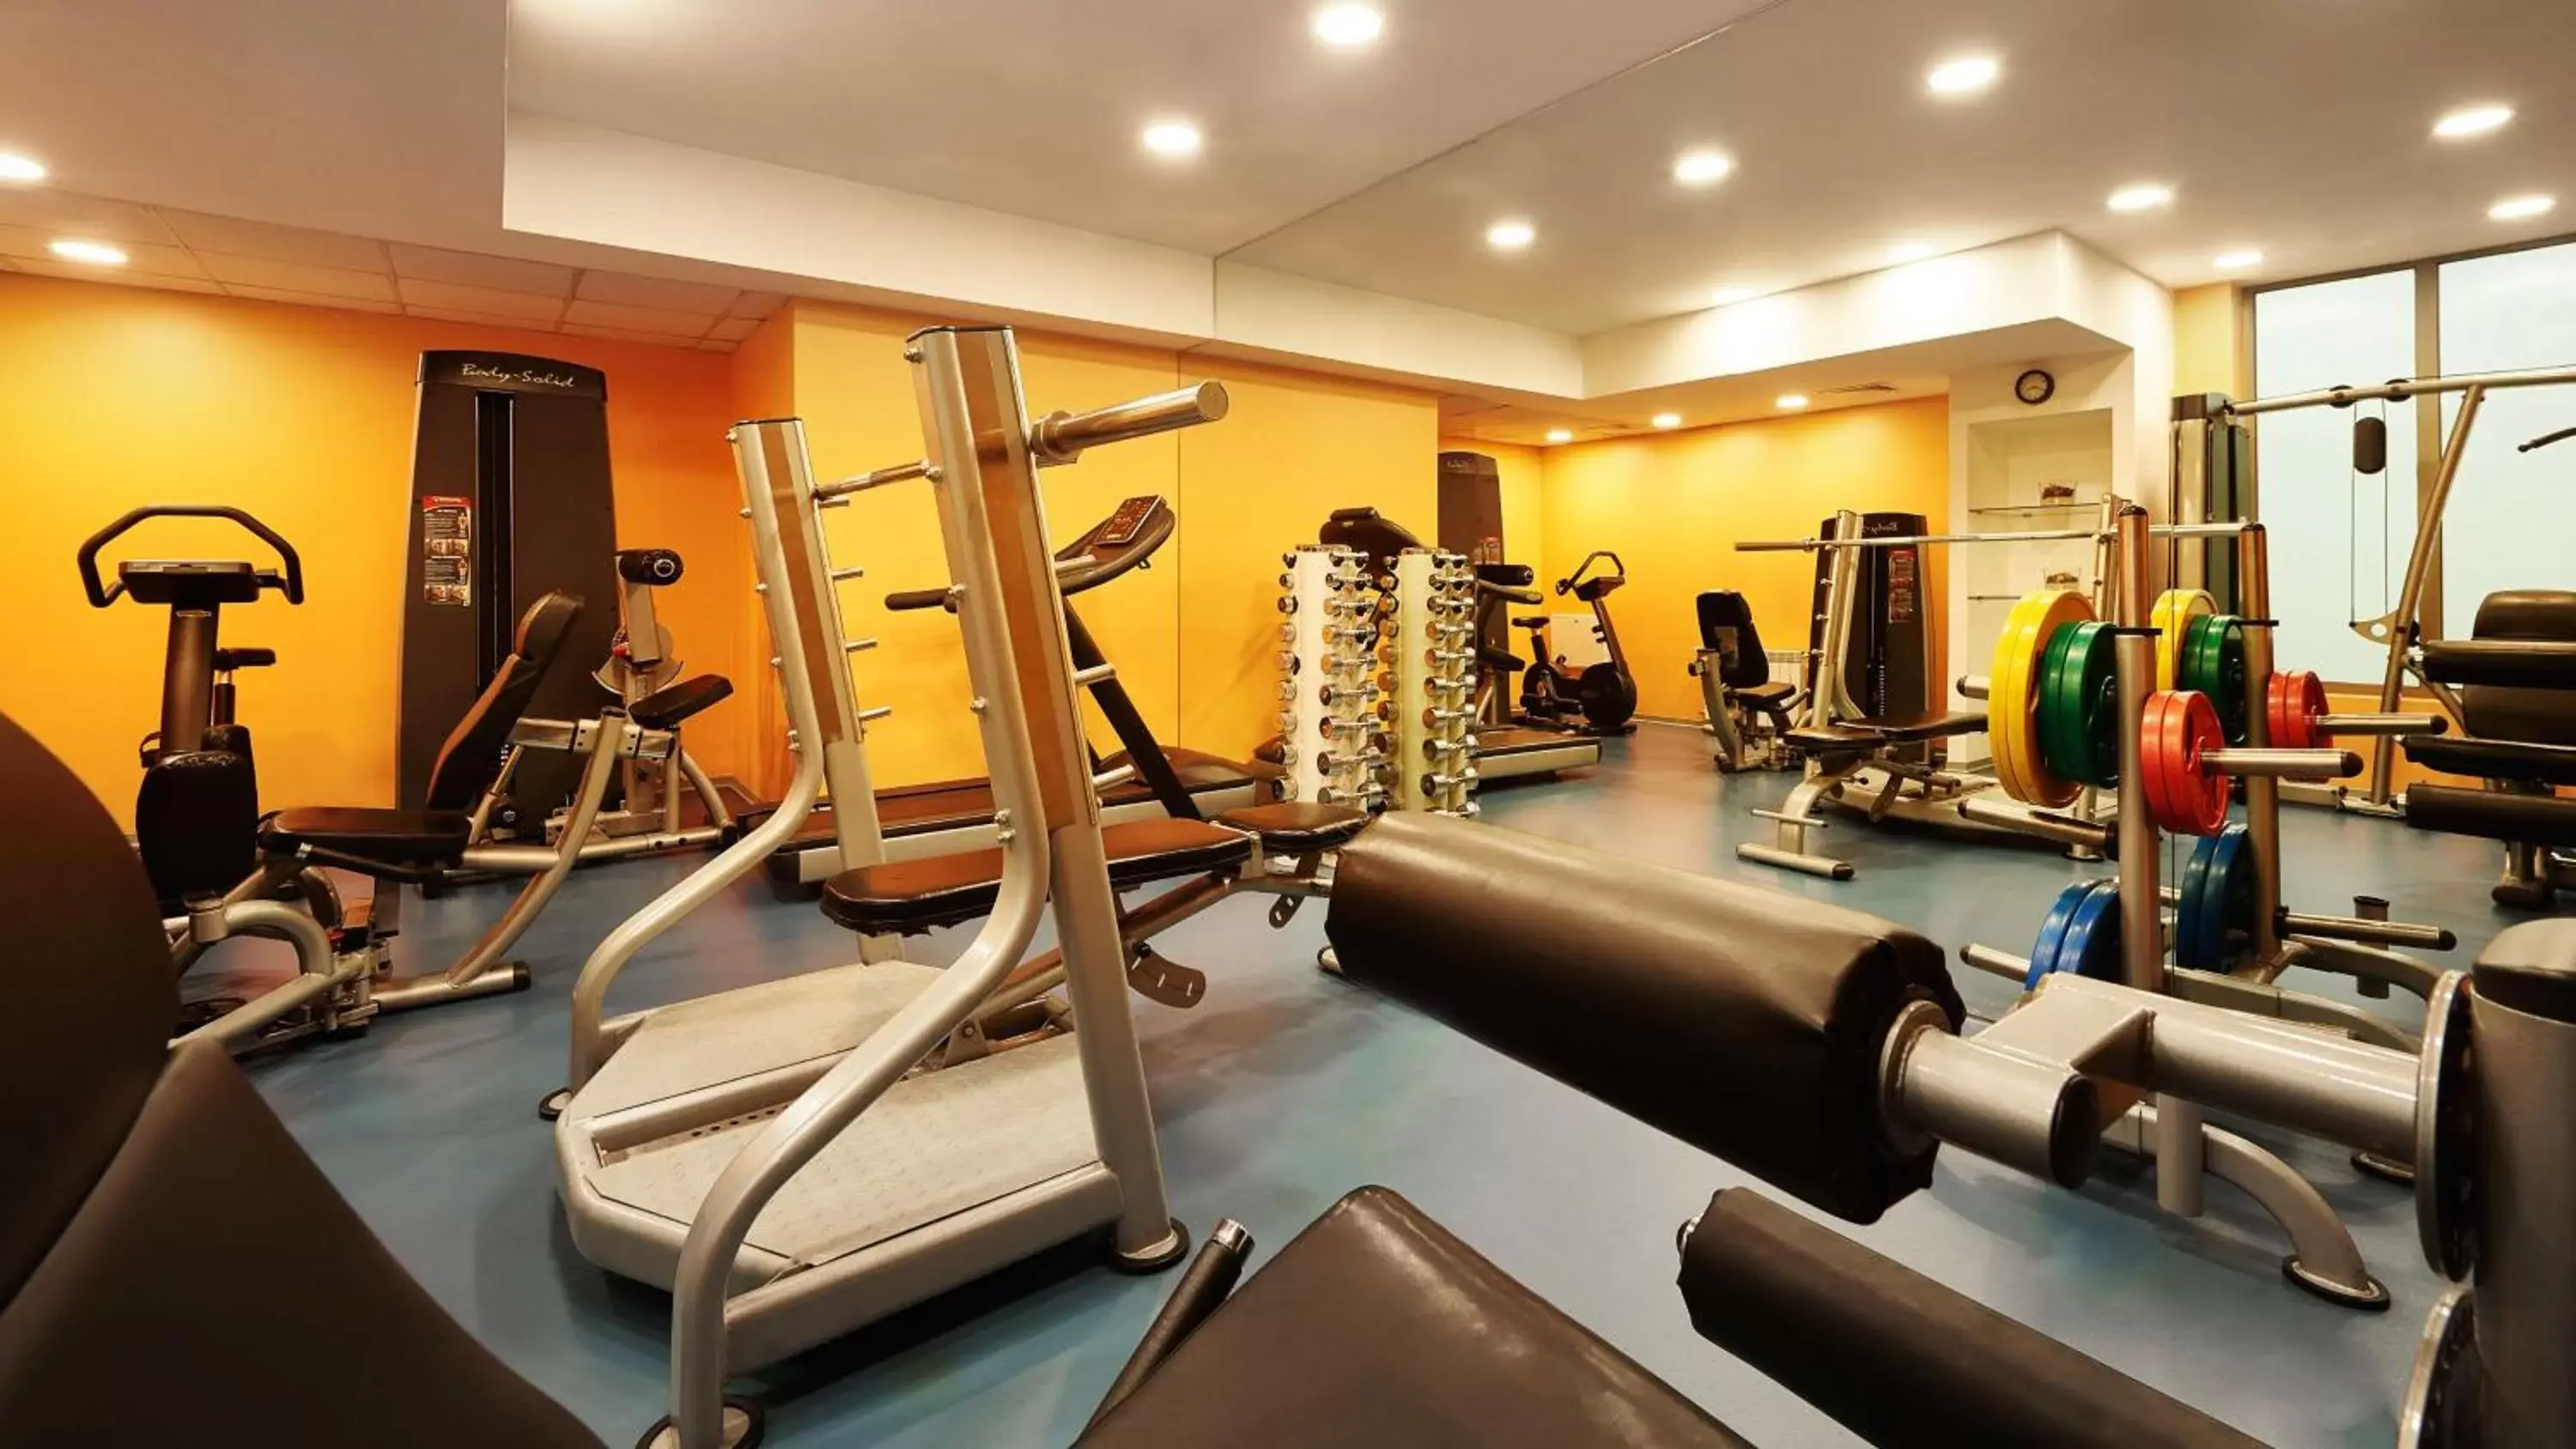 Spa and wellness centre/facilities, Fitness Center/Facilities in Metropolitan Hotel Sofia, a member of Radisson Individuals